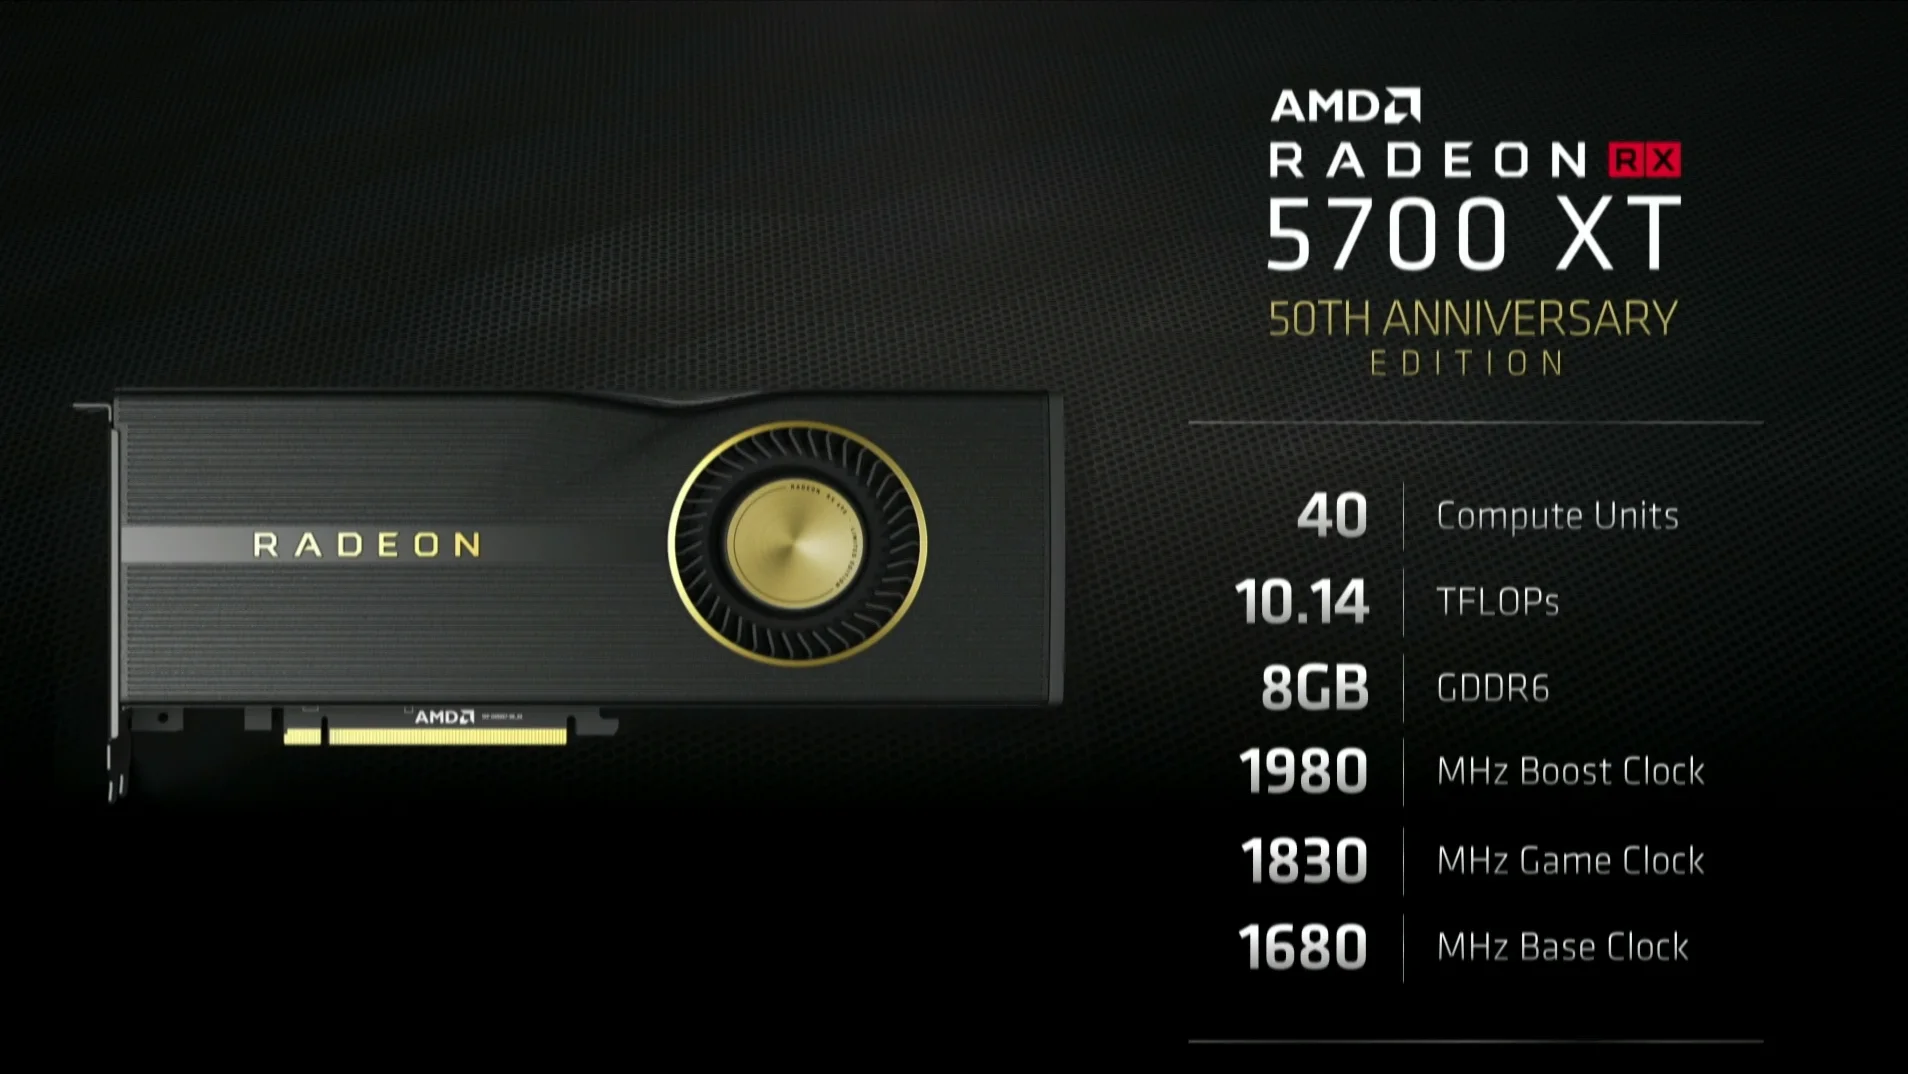 Представили AMD Radeon RX 5700 XT 50th Anniversary Edition: красивая, золотистая и разогнанная - фото 2